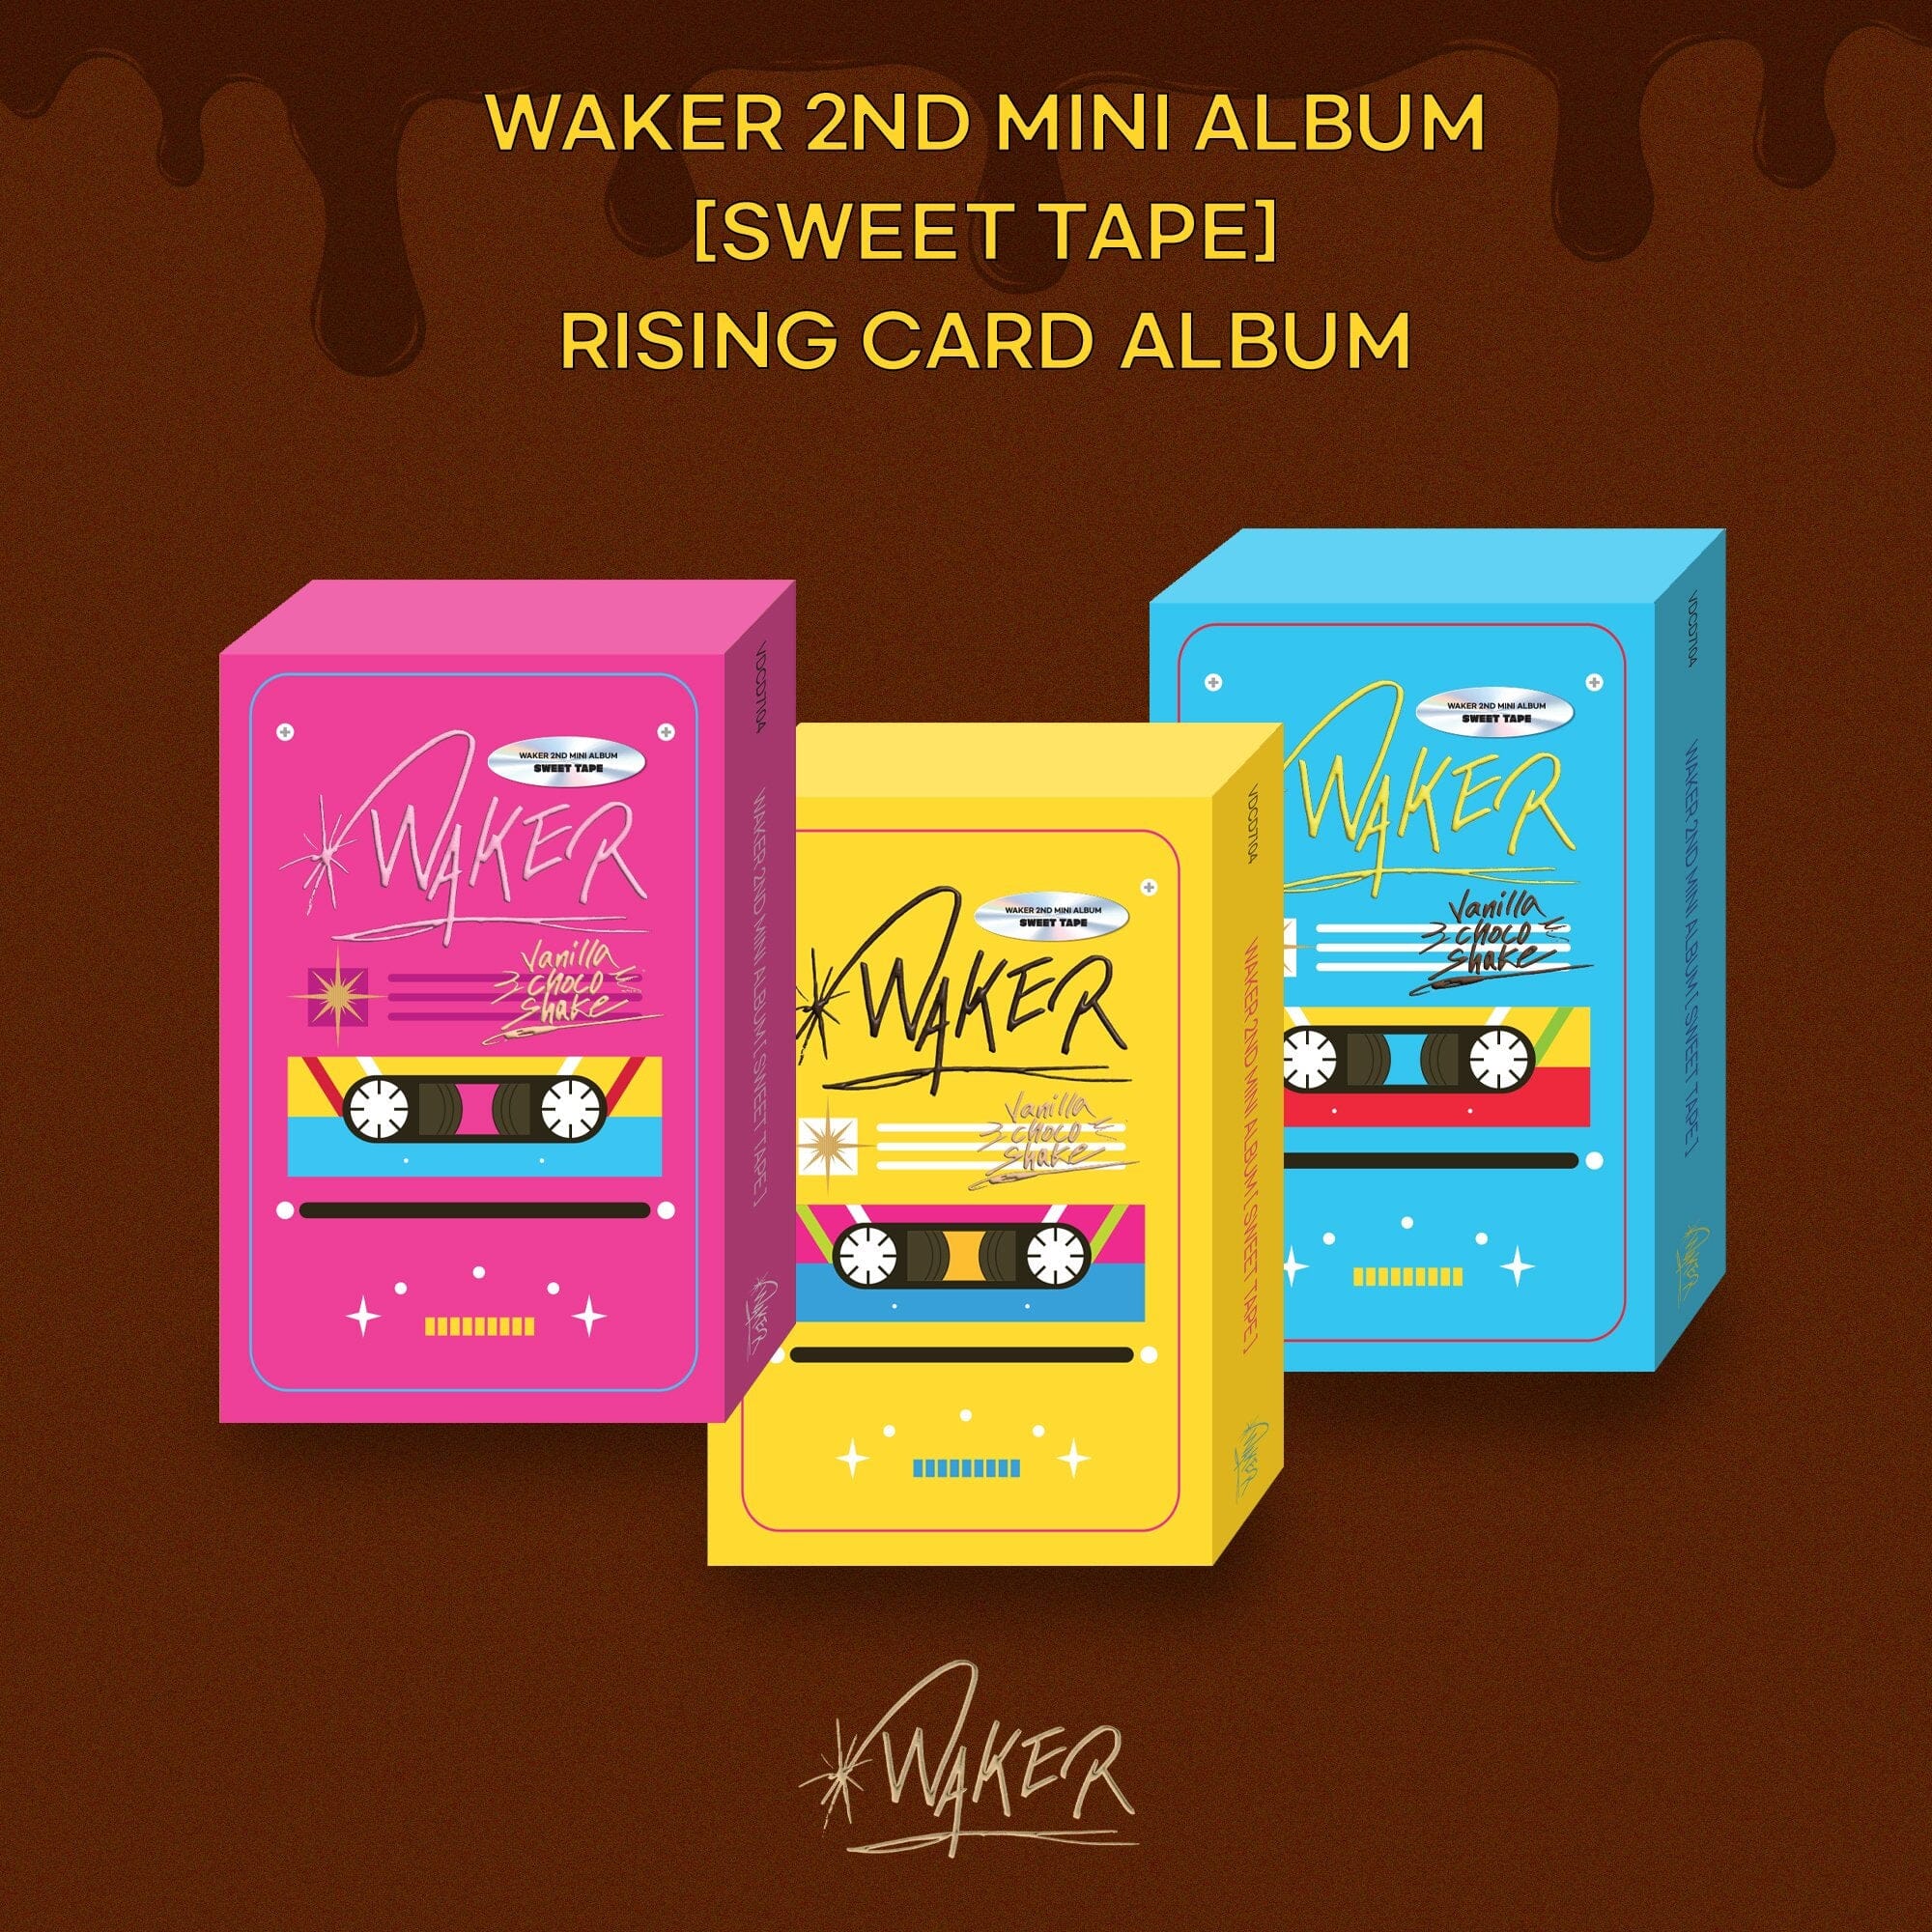 WAKER - SWEET TAPE (2ND MINI ALBUM) RISING CARD ALBUM